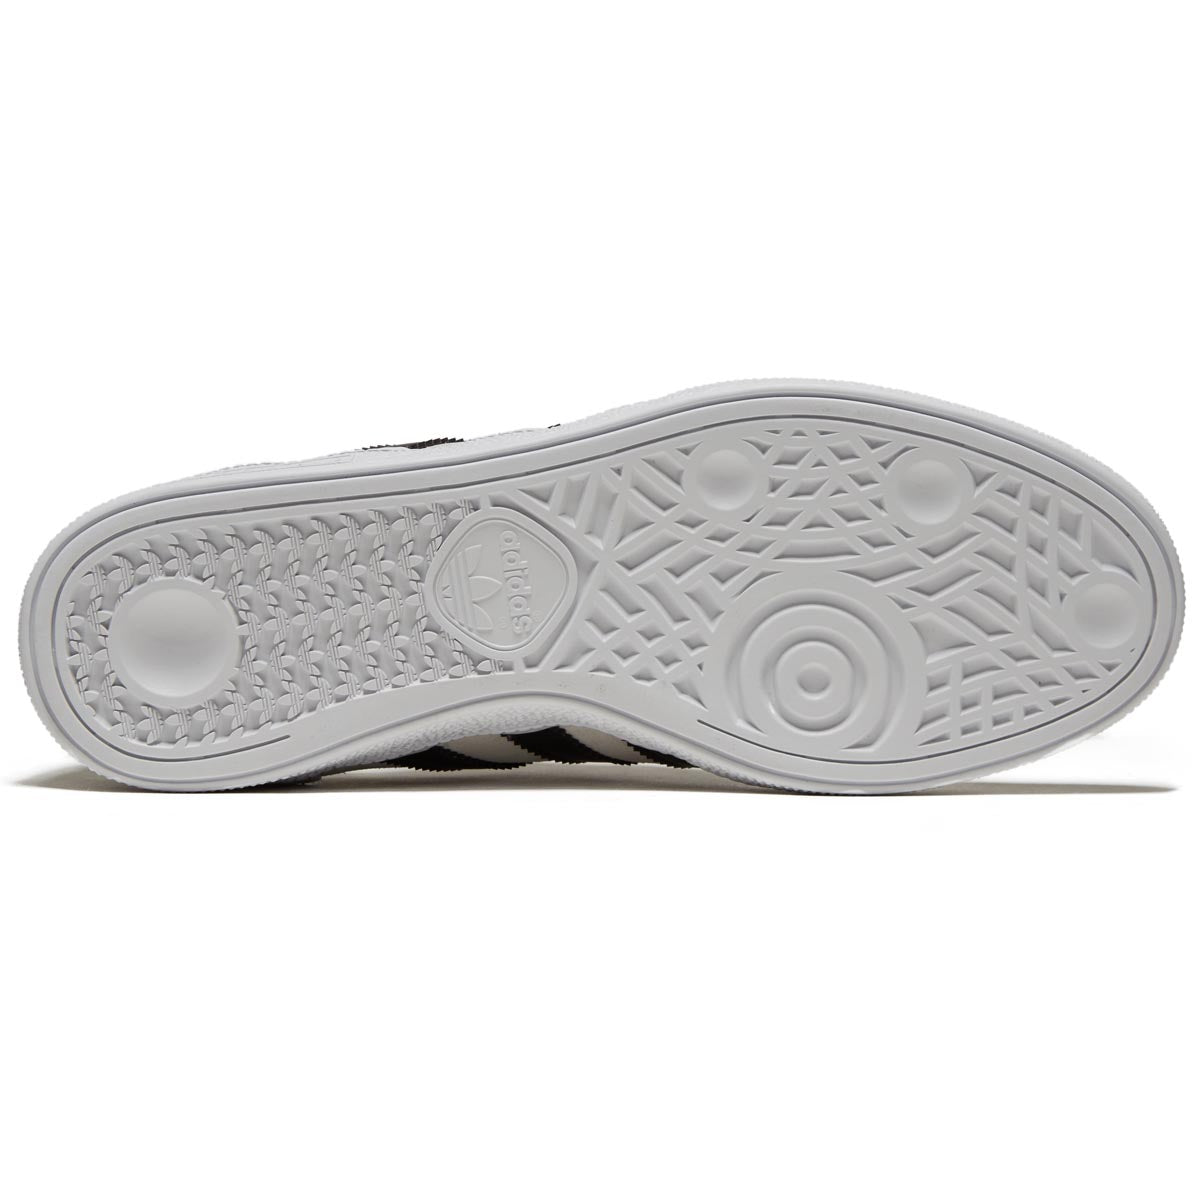 Adidas Busenitz Vintage Shoes - Crystal White/Black/White image 4